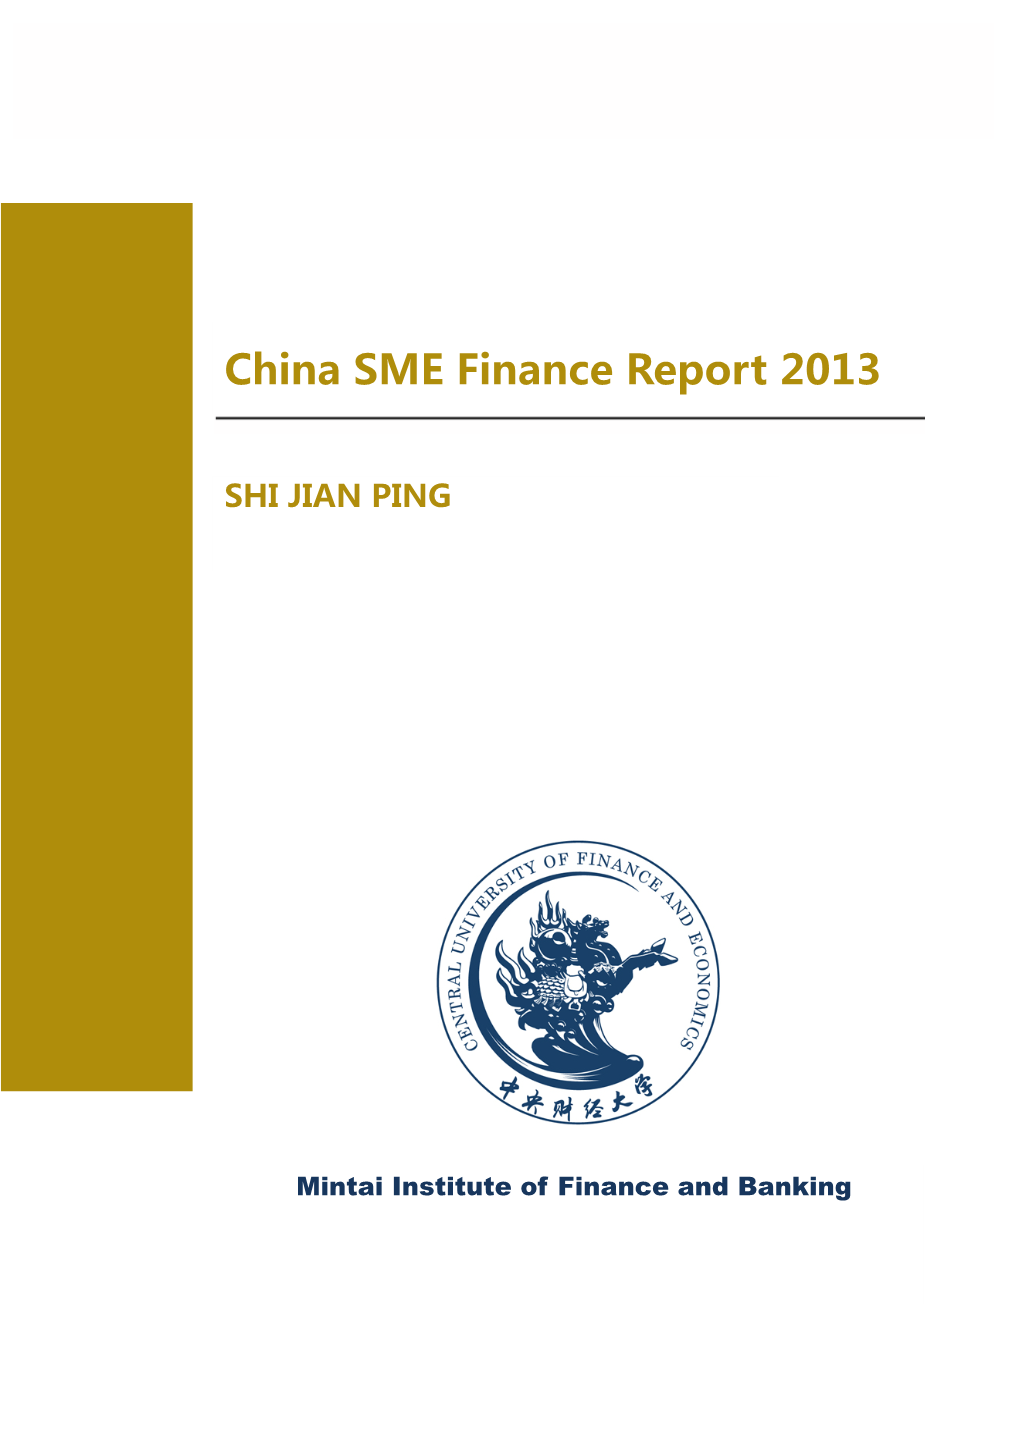 China SME Finance Report 2013